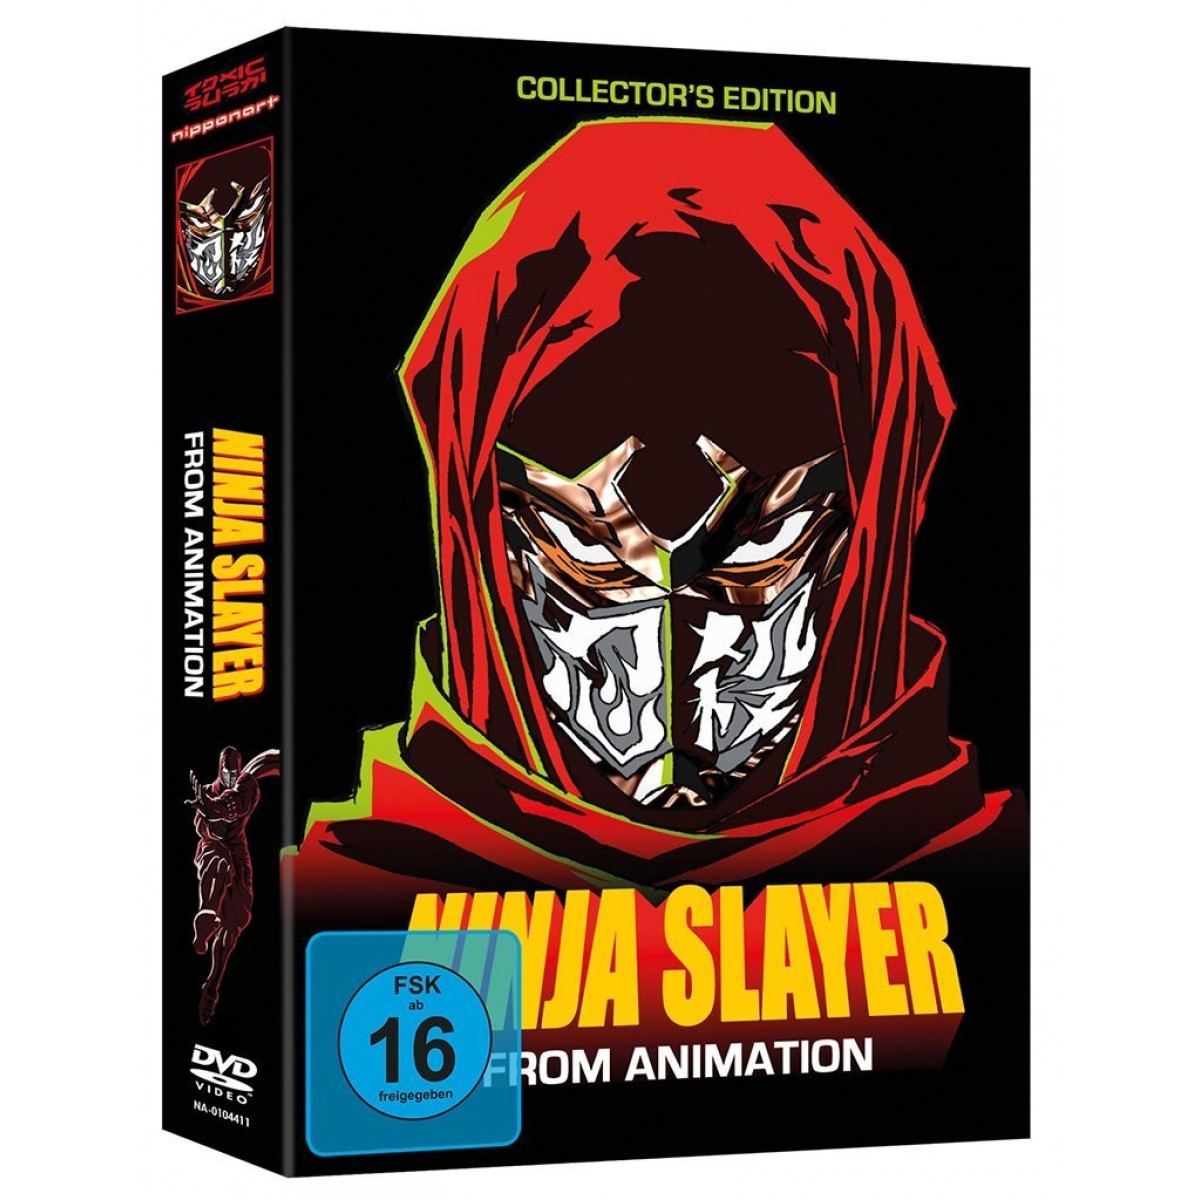 Ninja-Slayer-from-Animation-DVD-Edition-31.jpg